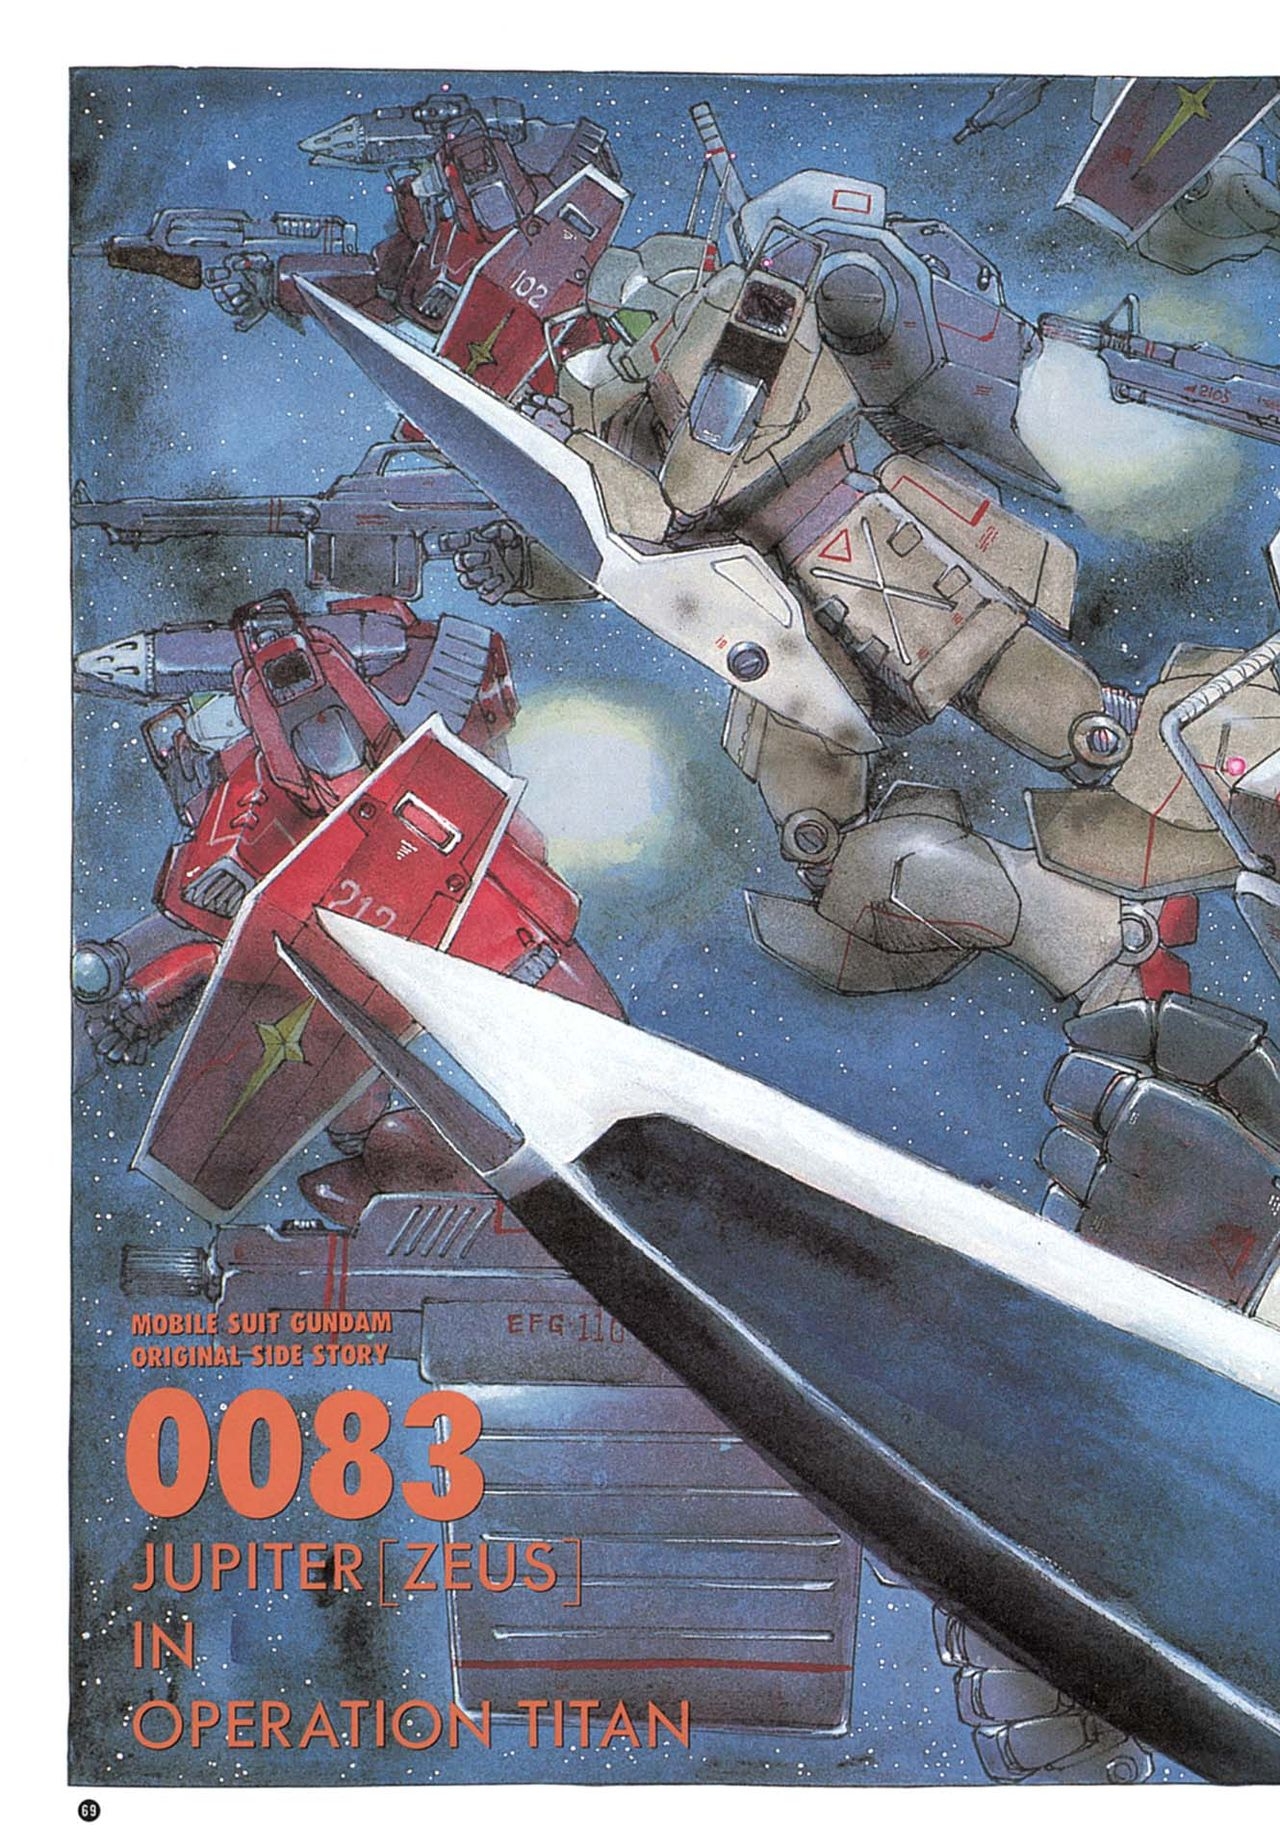 [Kazuhisa Kondo] Kazuhisa Kondo 2D & 3D Works - Go Ahead - From Mobile Suit Gundam to Original Mechanism 68